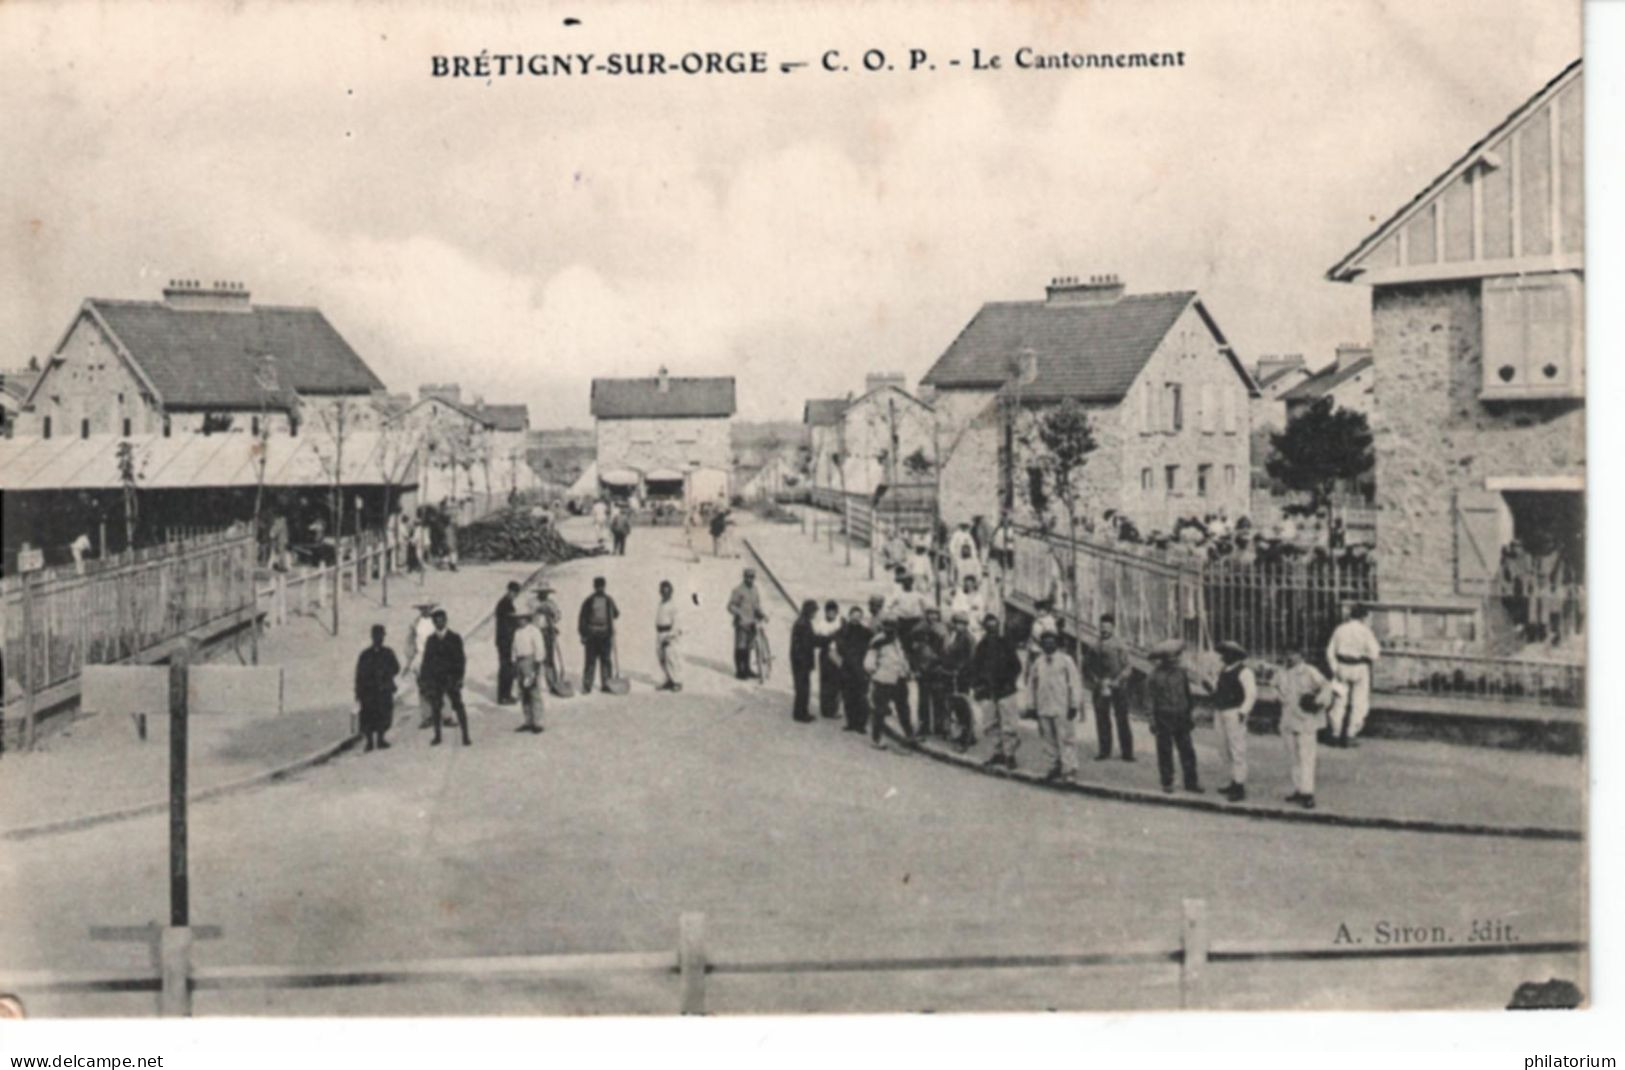 91  BRETIGNY Sur ORGE,  COP,  Le Cantonnement, COA, - Bretigny Sur Orge